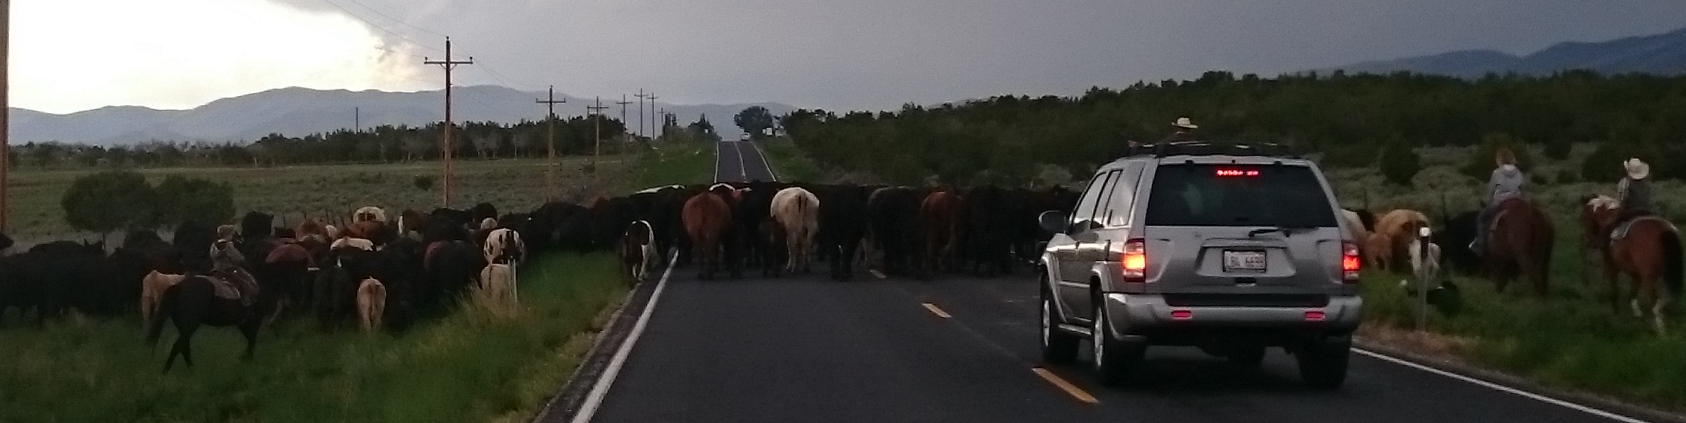 cow roadblock